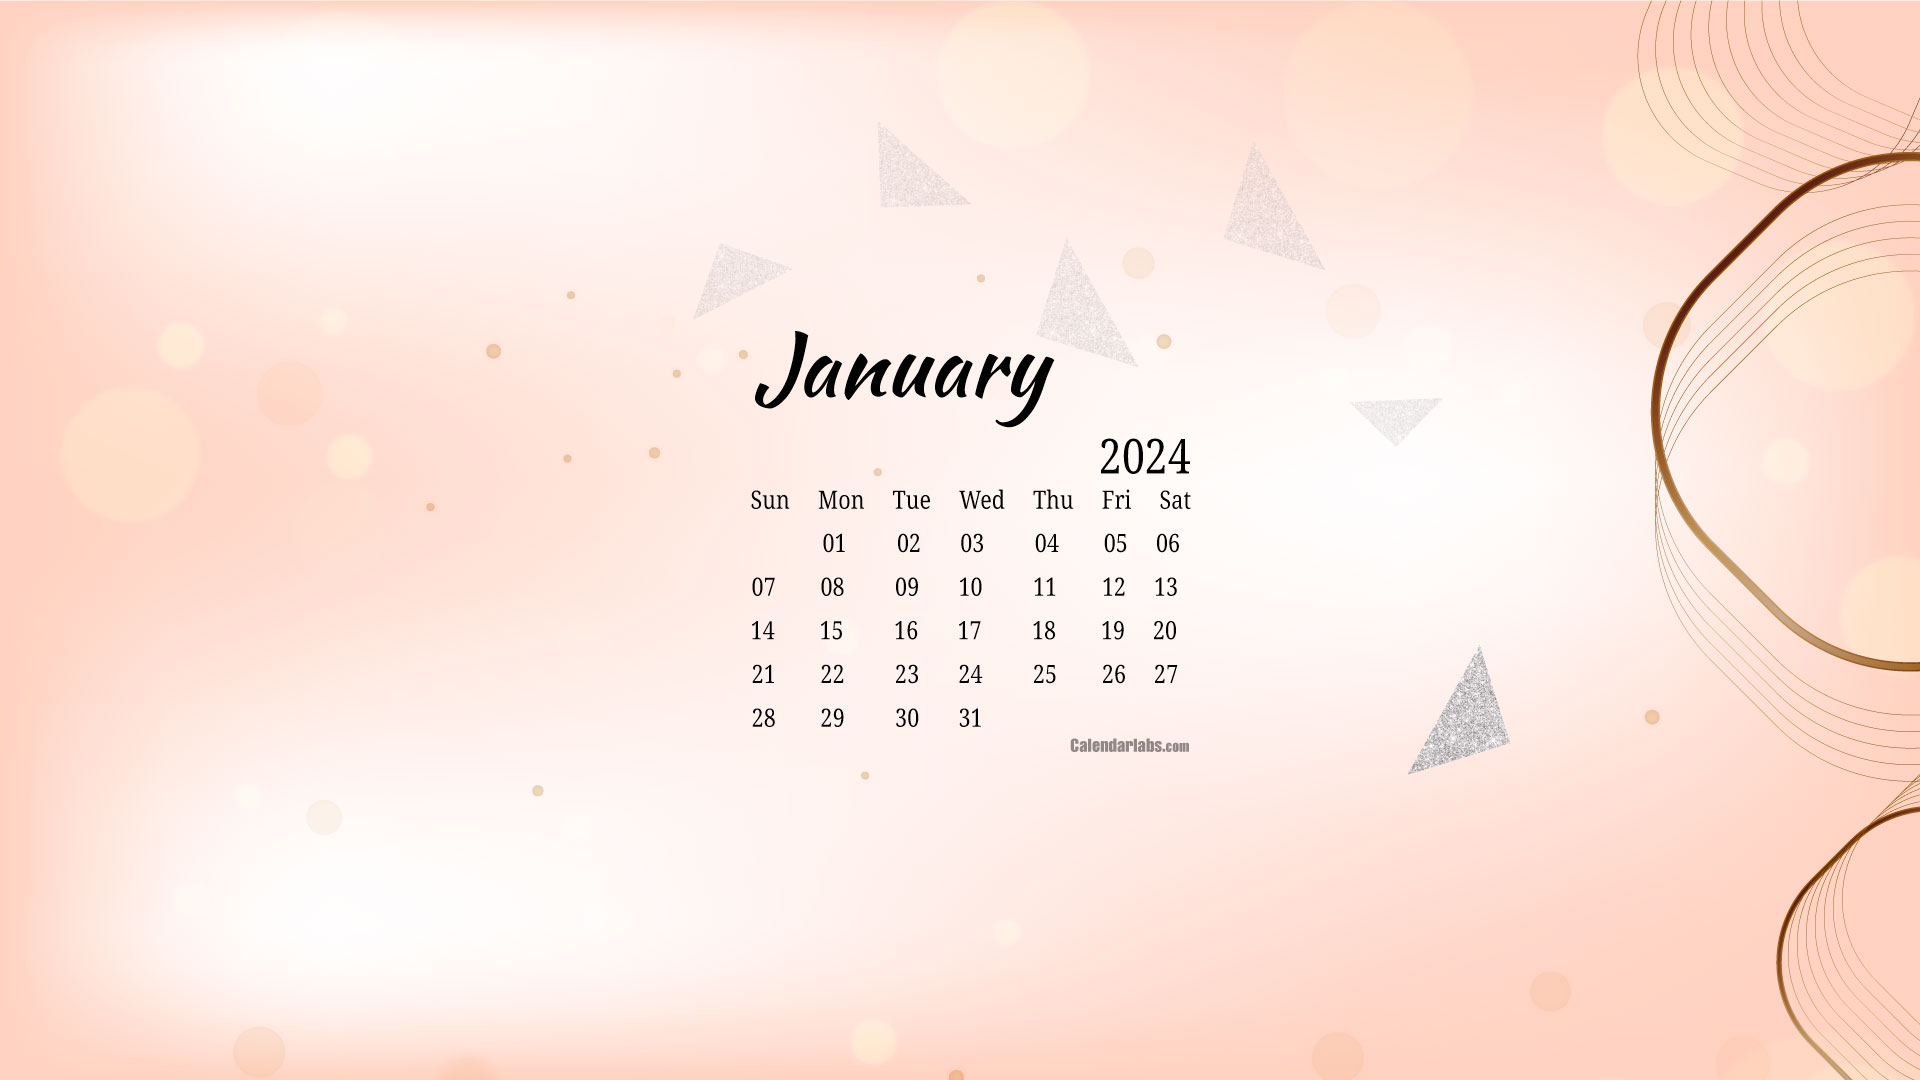 January 2024 Desktop Wallpaper Calendar - Calendarlabs | Calendar Labs Printable Calendar 2024